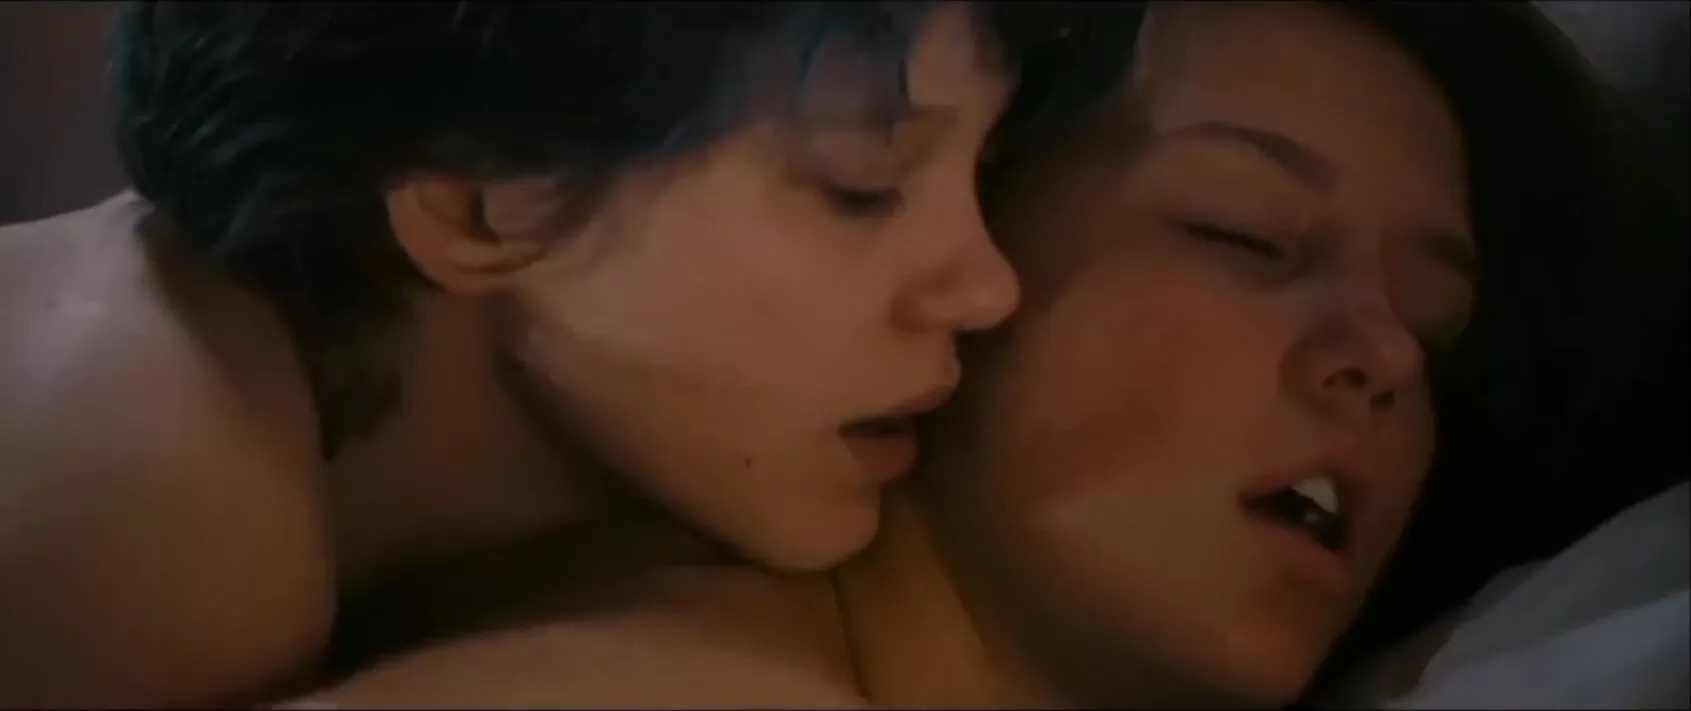 Lesbian hot sex scene